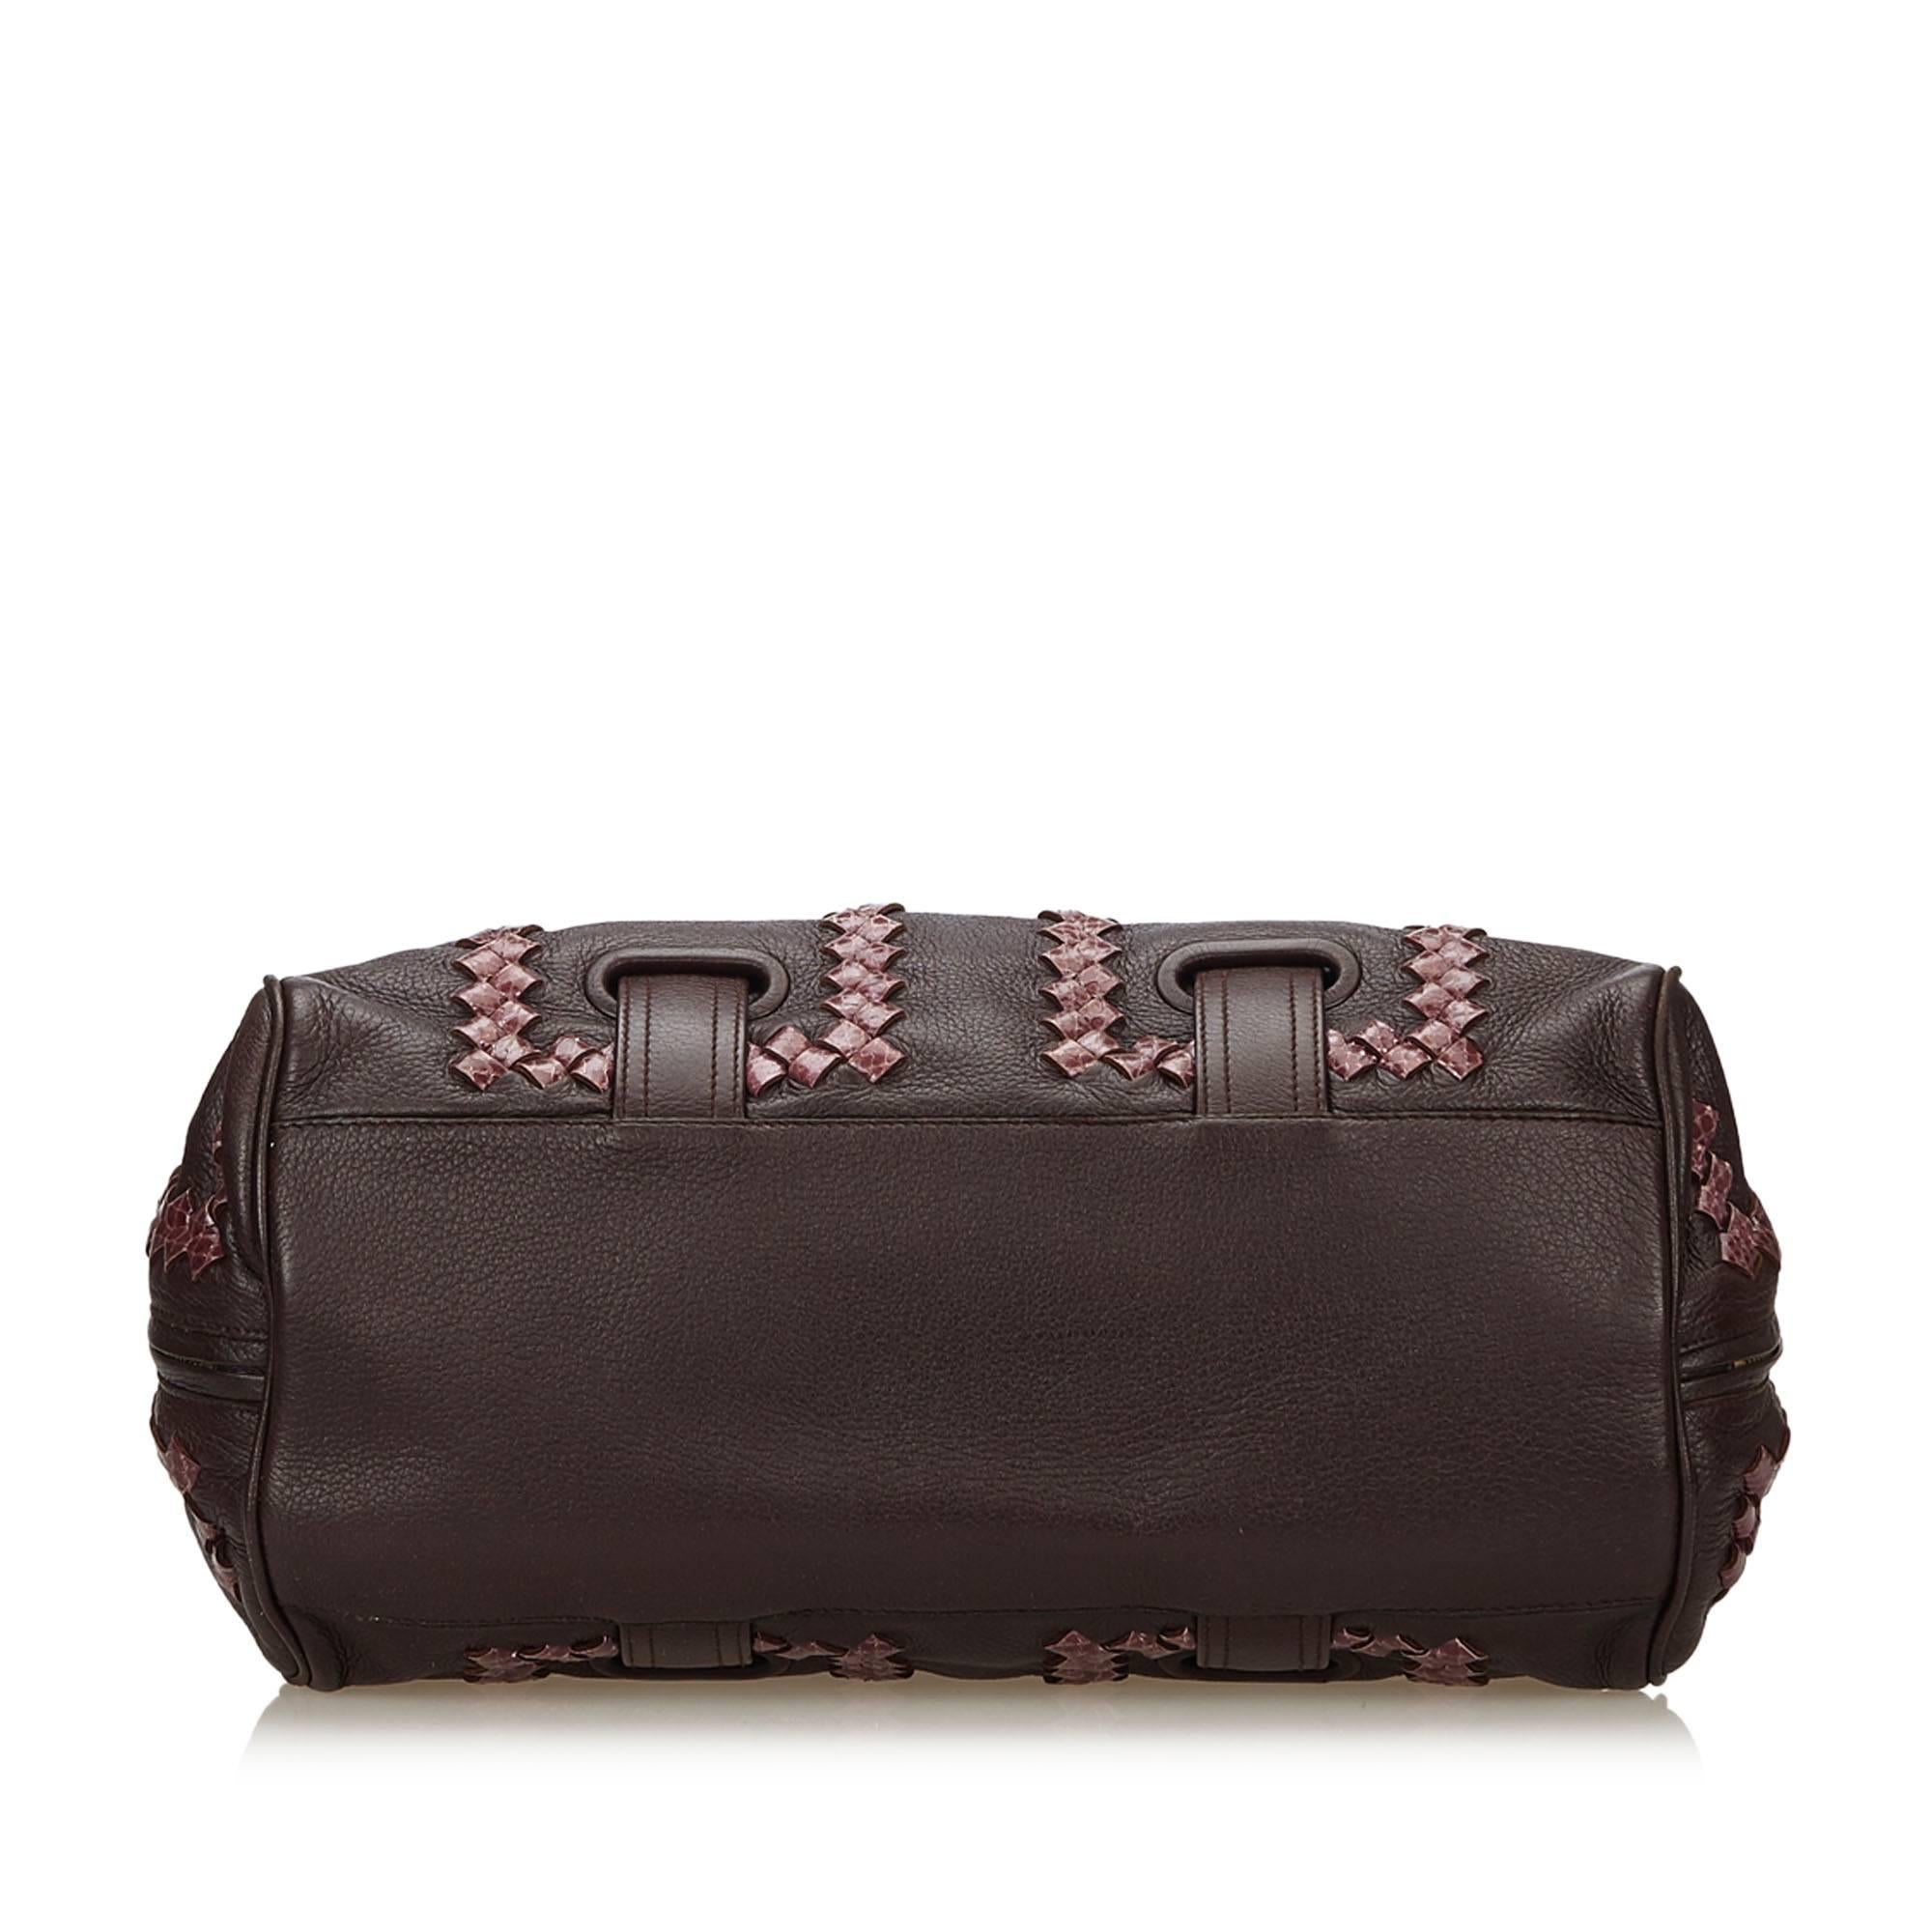 Bottega Veneta Dark Brown Leather Shoulder Bag In Good Condition For Sale In Orlando, FL